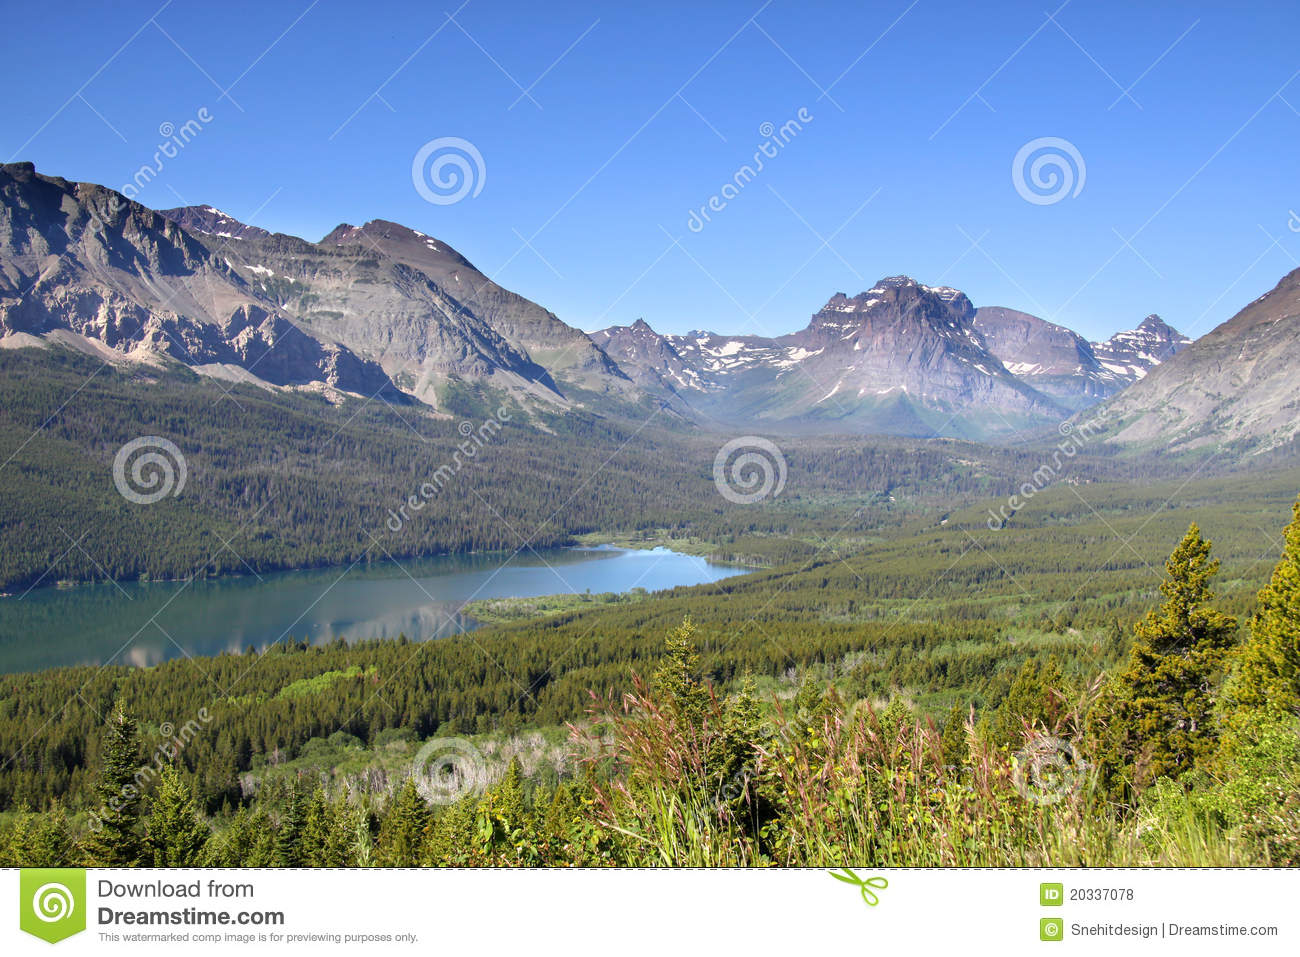 Source URL httpkootationcom glacier national park montana green